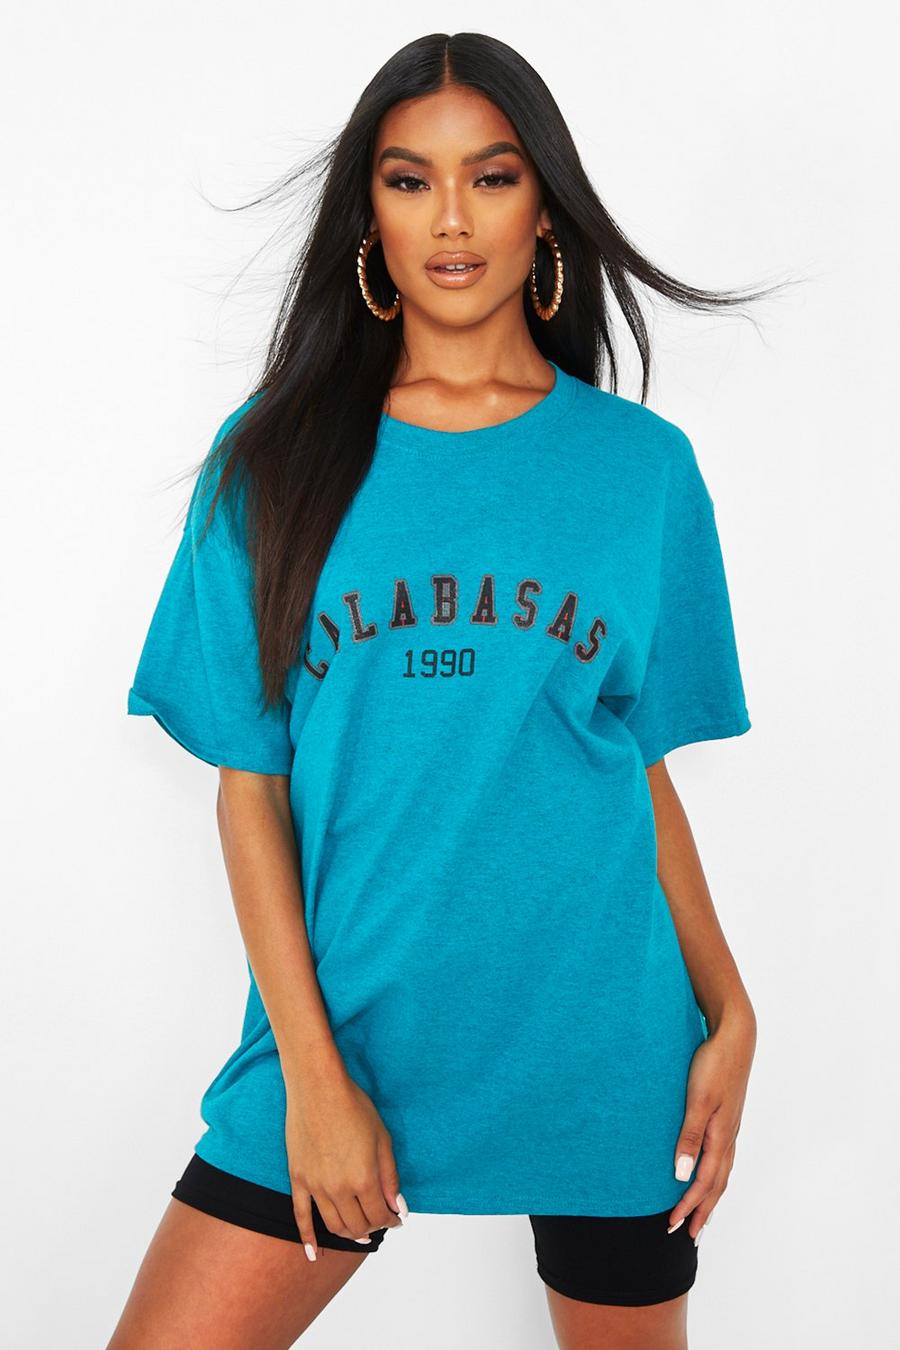 Teal Calabasas 1990 Collegiate Graphic T-Shirt image number 1